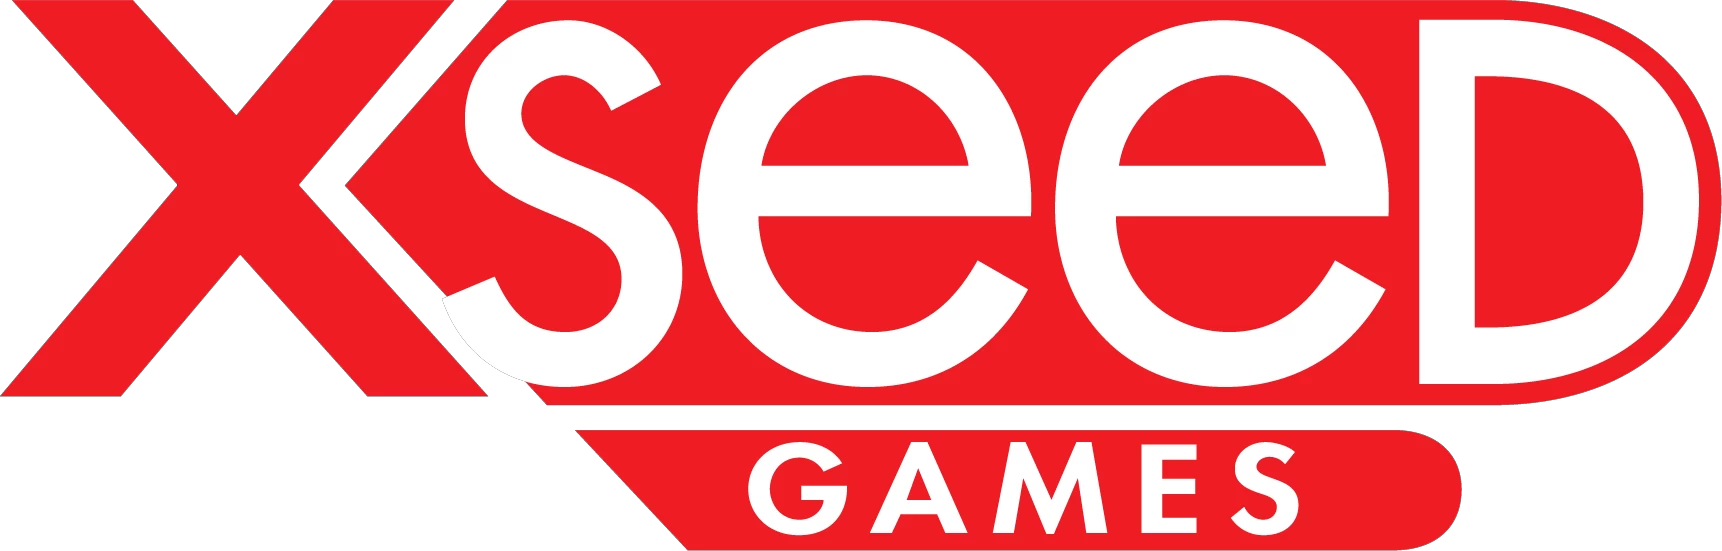 XSEED Games logo